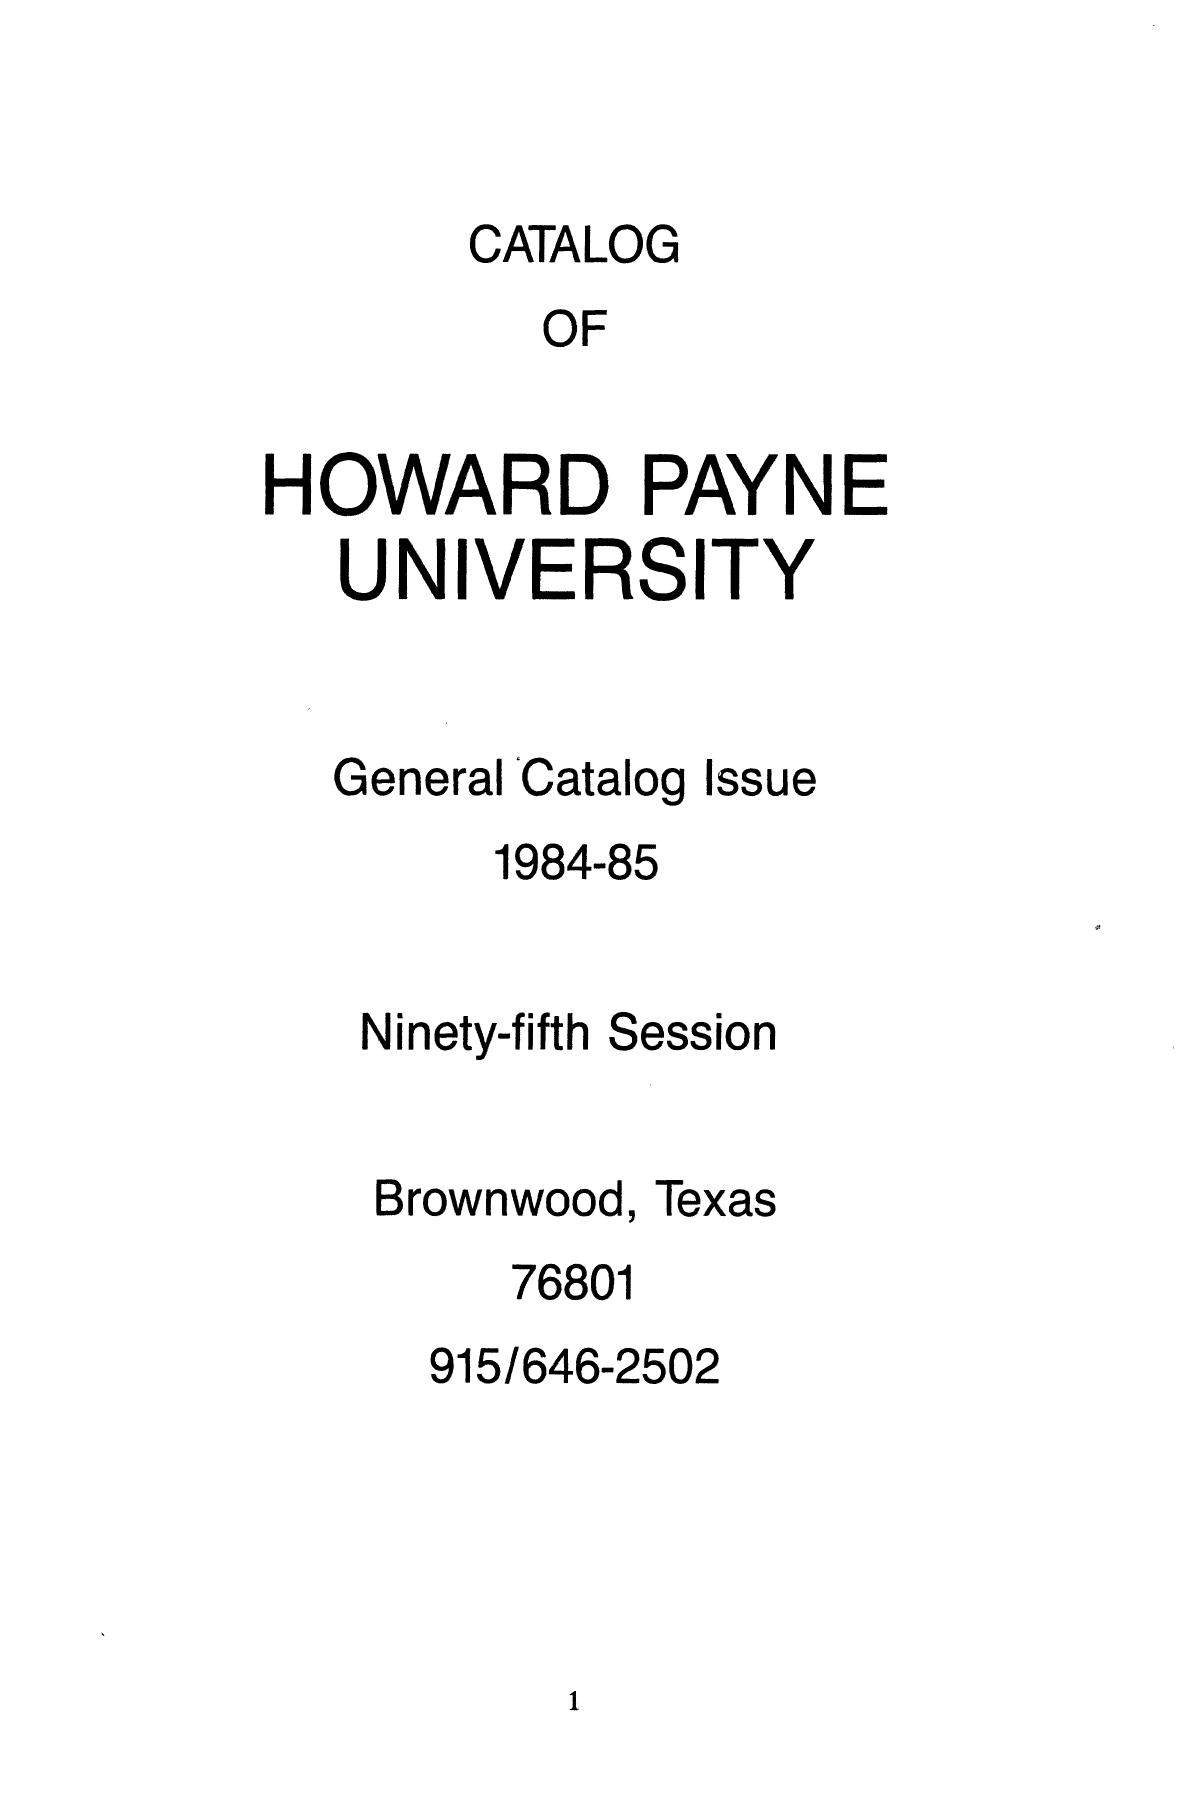 Catalog of Howard Payne University, 1984-1985
                                                
                                                    1
                                                